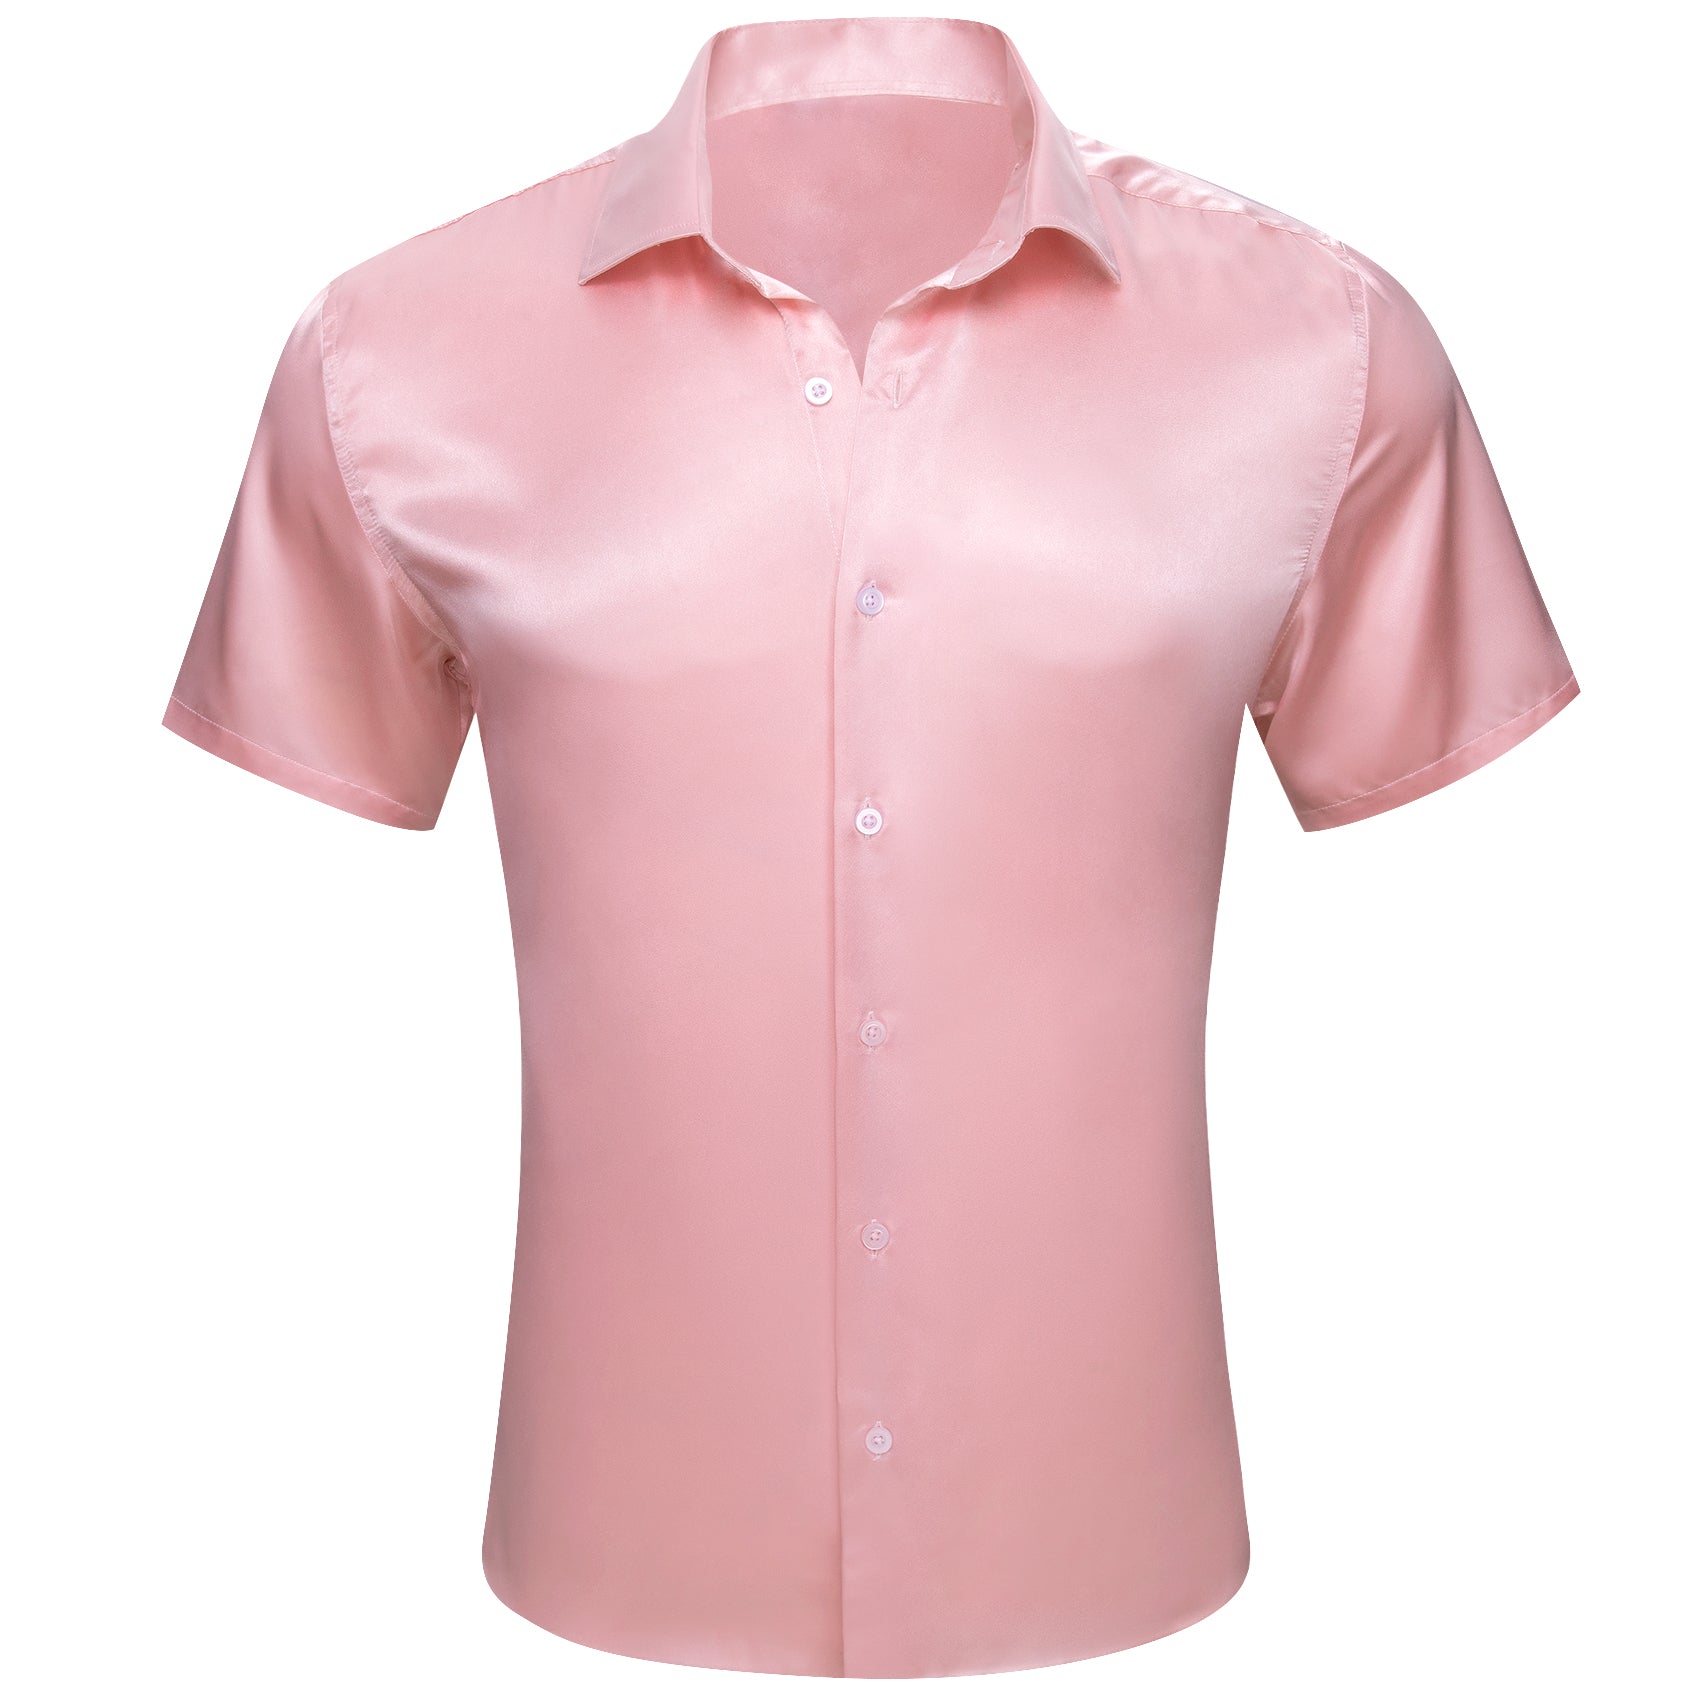 Barry wang pink shirt mens button down top for wedding 